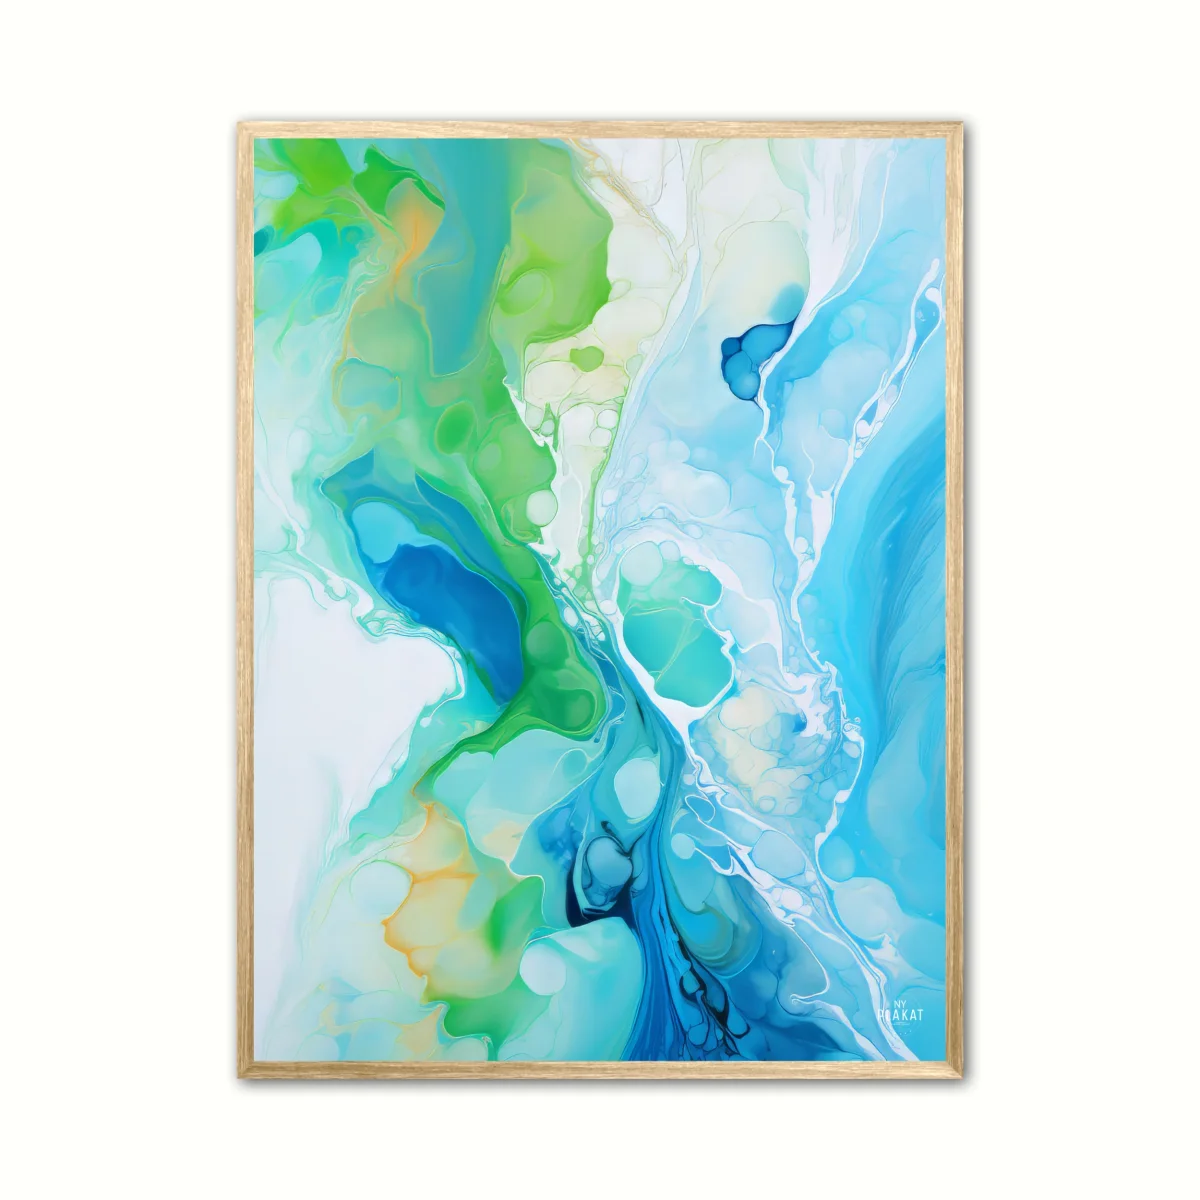 Vivid Serenity - Abstrakt plakat 21 x 29,7 cm (A4)